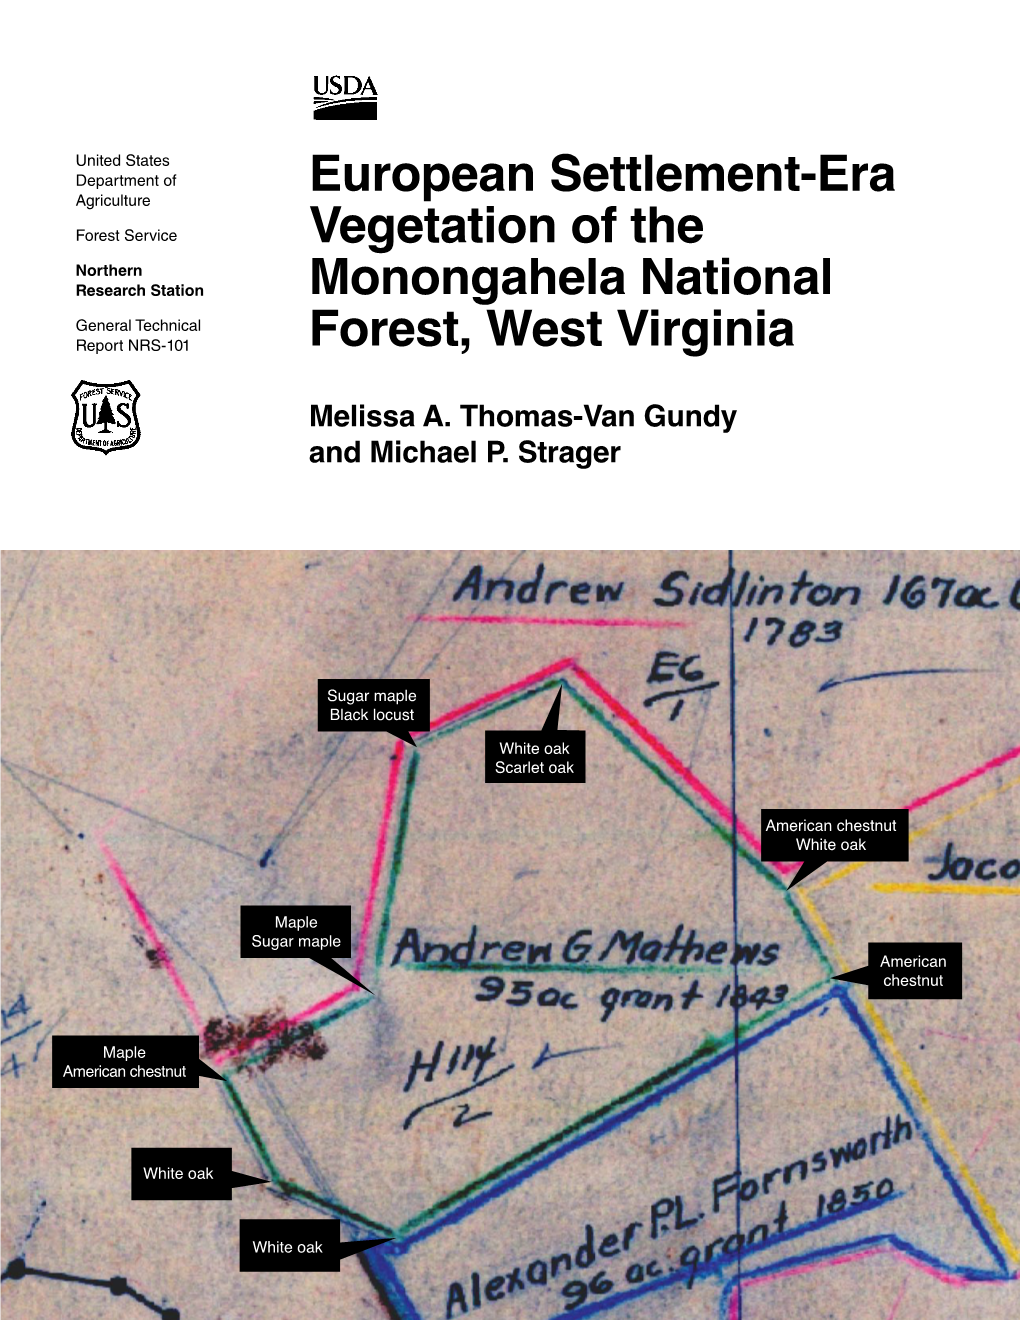 European Settlement-Era Vegetation of the Monongahela National Forest, West Virginia